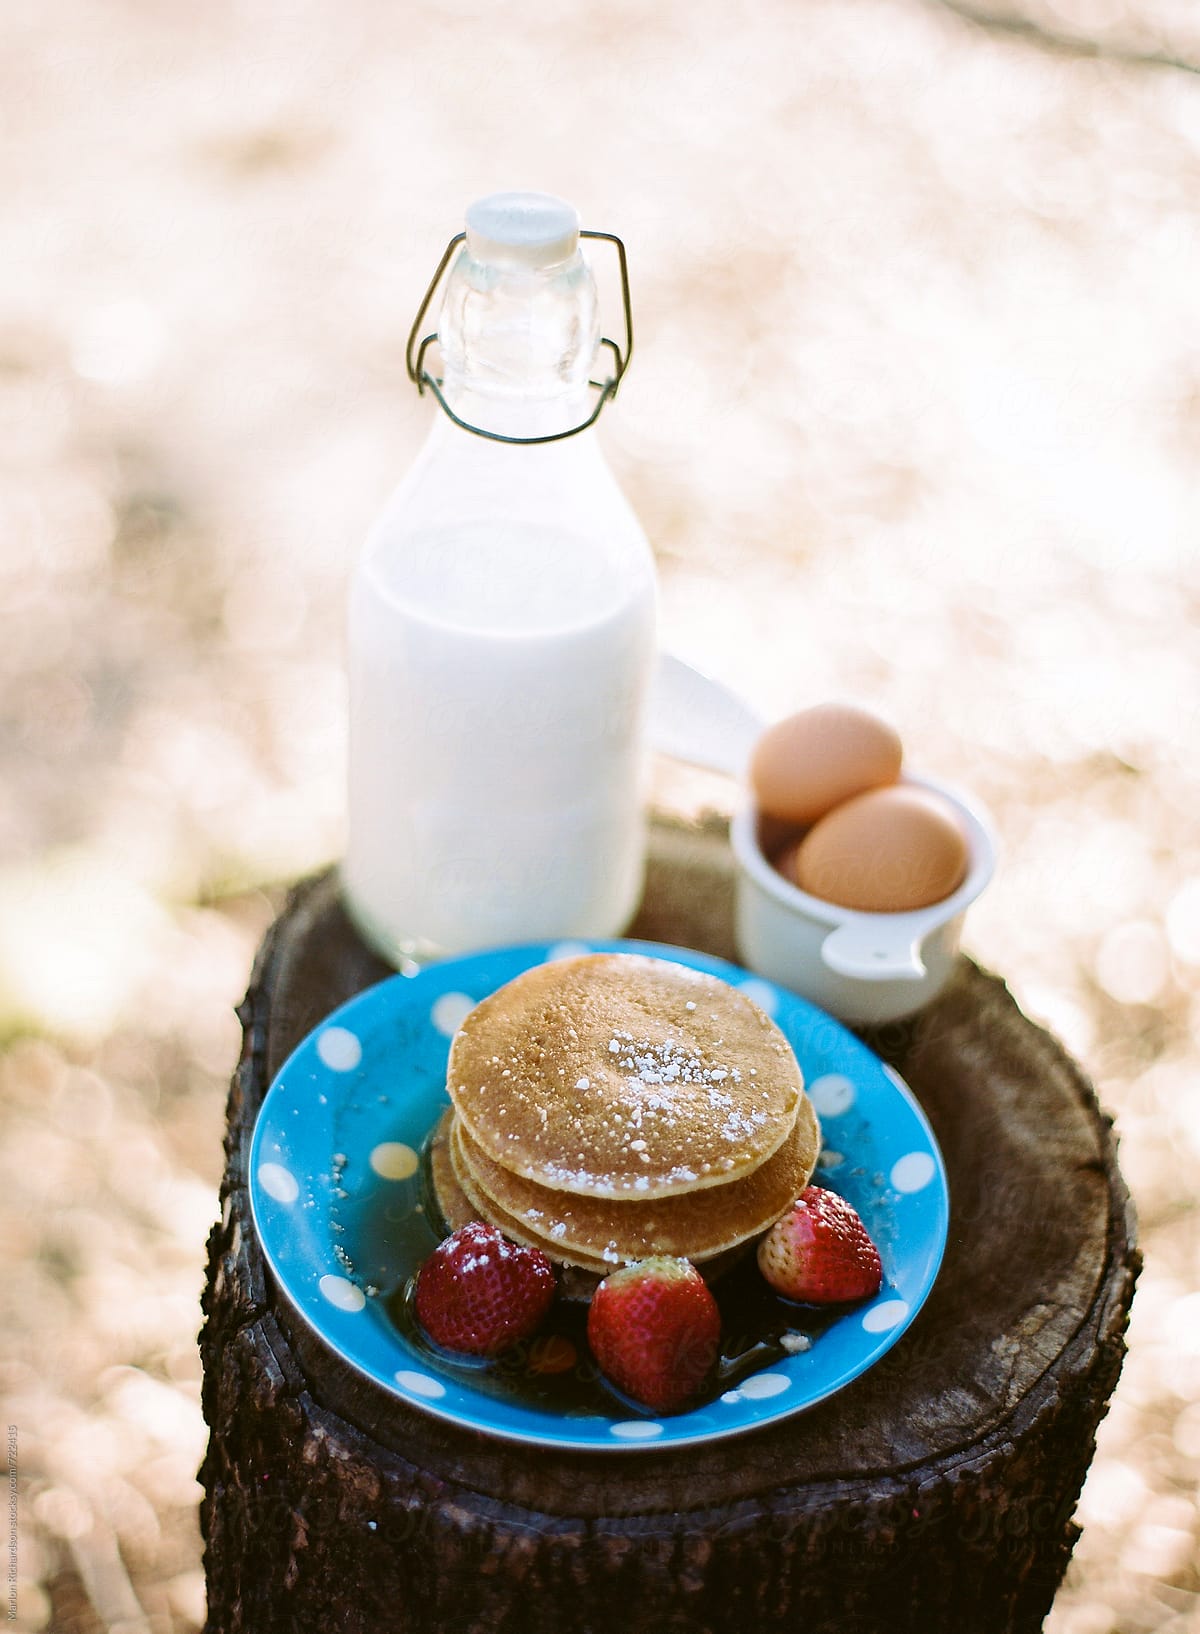 Pancakes, milk eggs, and strawberries